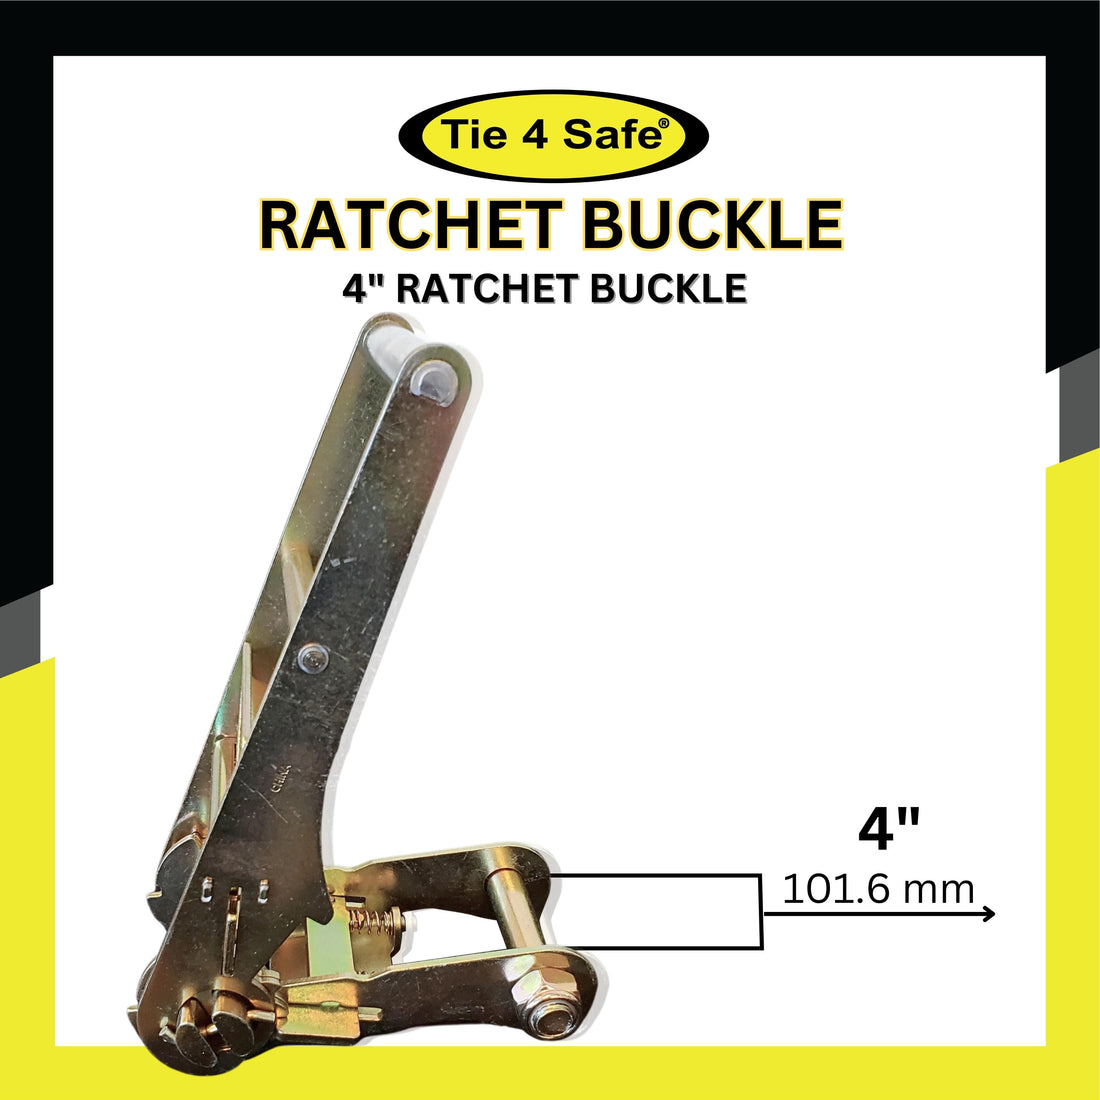 4" Ratchet Buckle